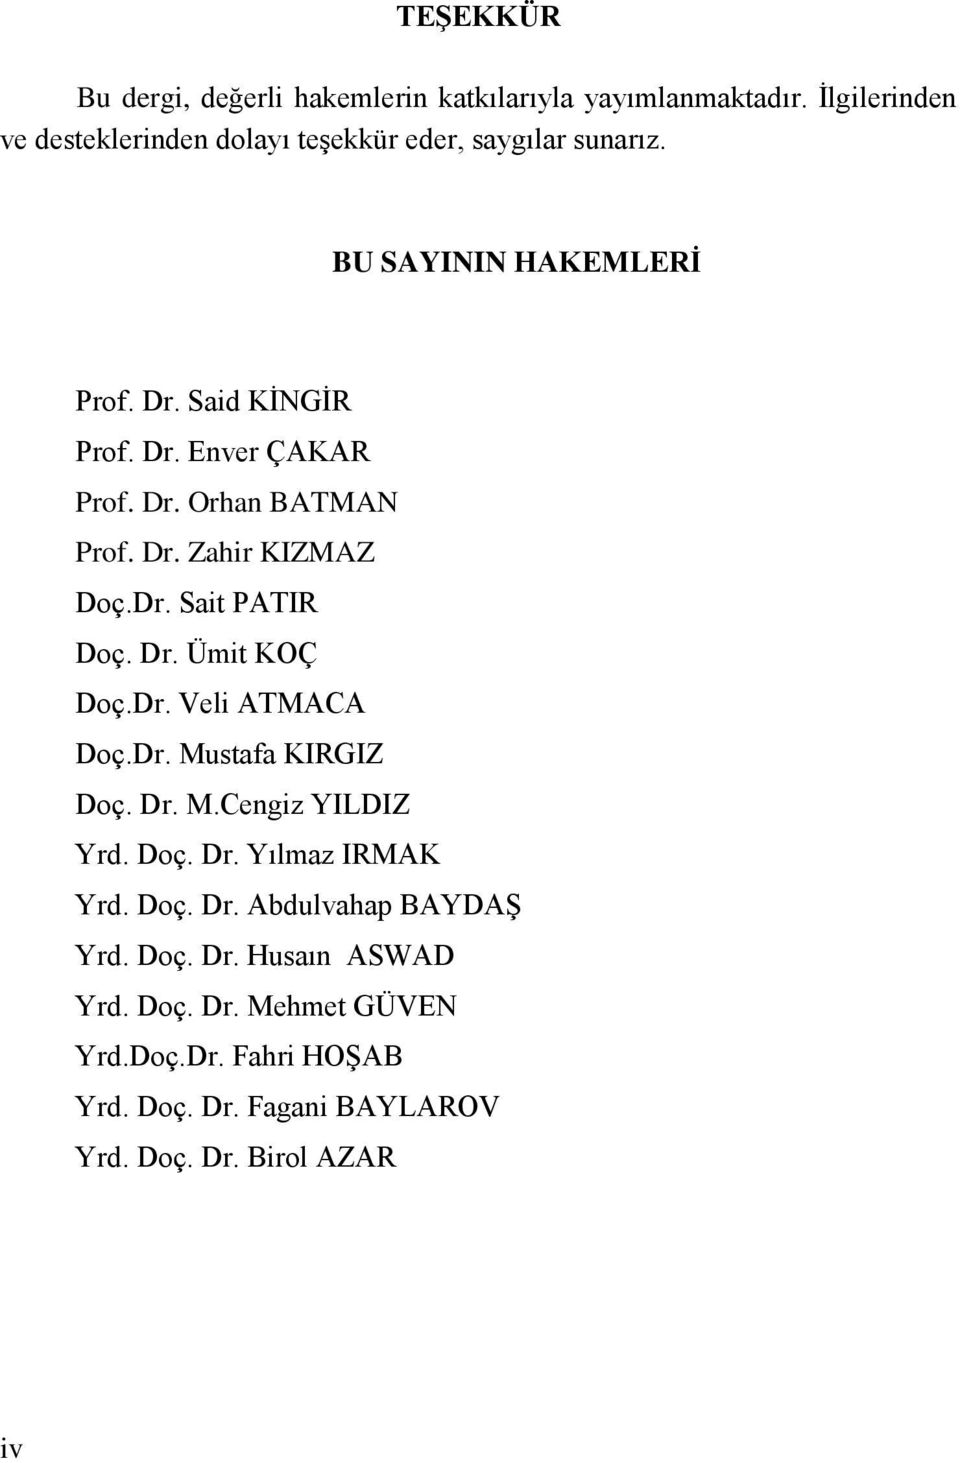 Dr. Orhan BATMAN Prof. Dr. Zahir KIZMAZ Doç.Dr. Sait PATIR Doç. Dr. Ümit KOÇ Doç.Dr. Veli ATMACA Doç.Dr. Mustafa KIRGIZ Doç. Dr. M.Cengiz YILDIZ Yrd.